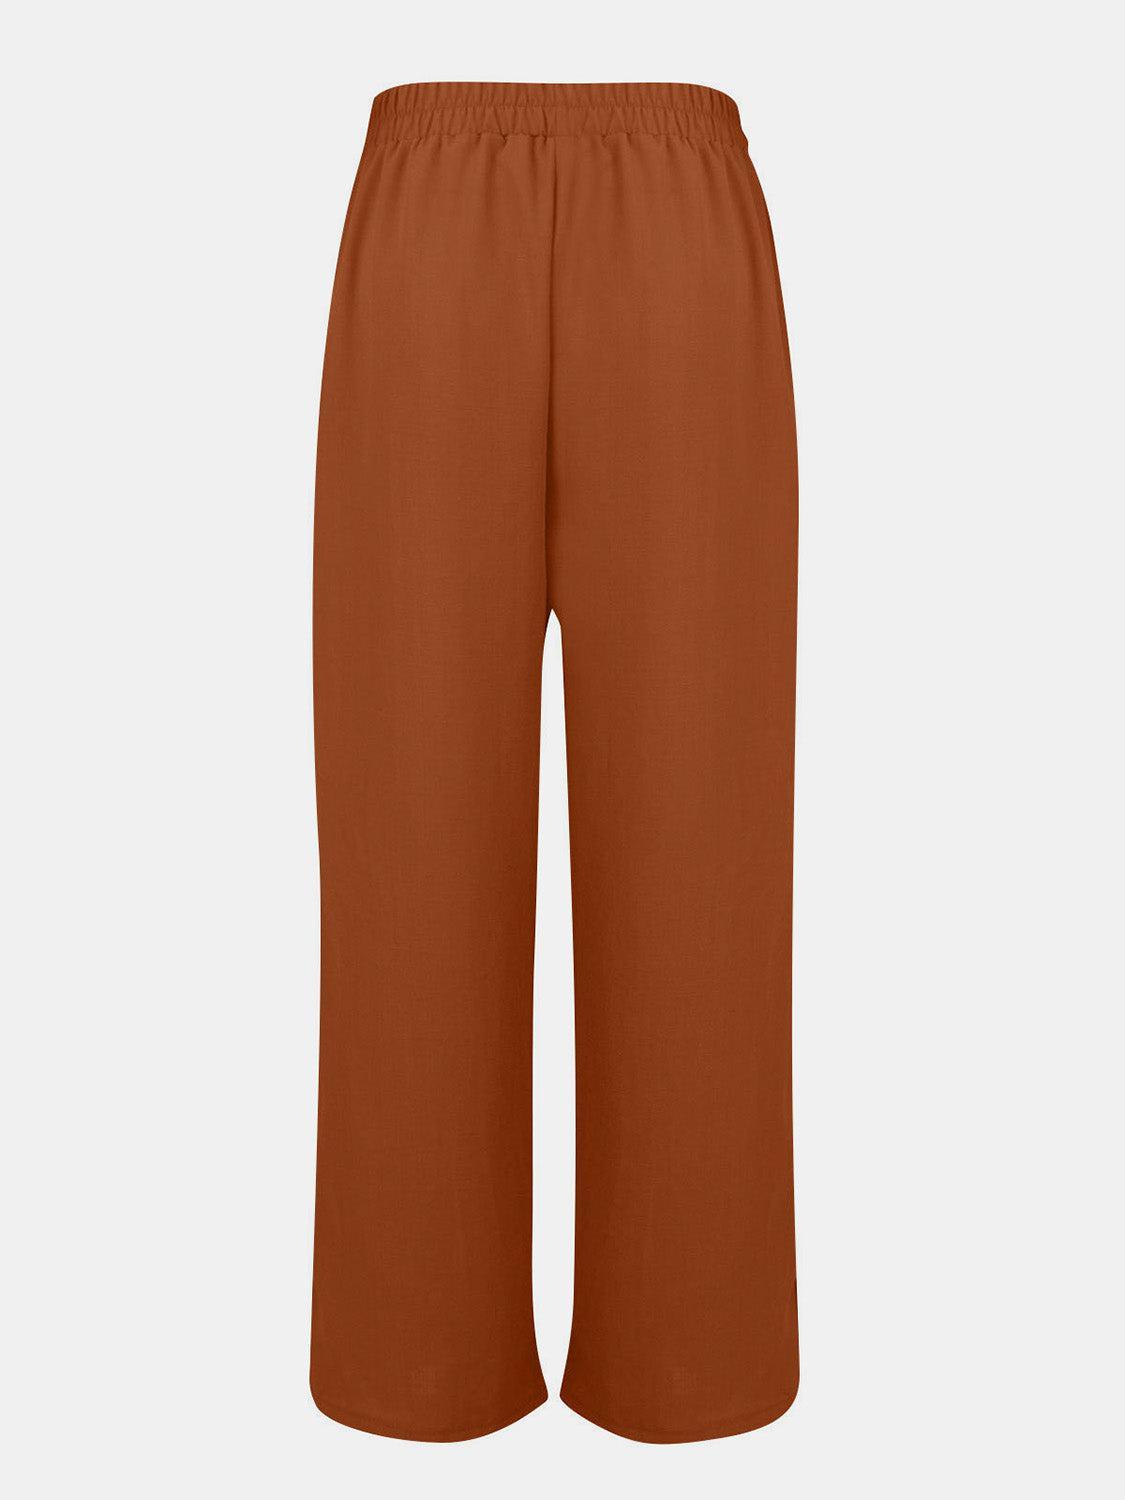 a women's brown pants with a high waist